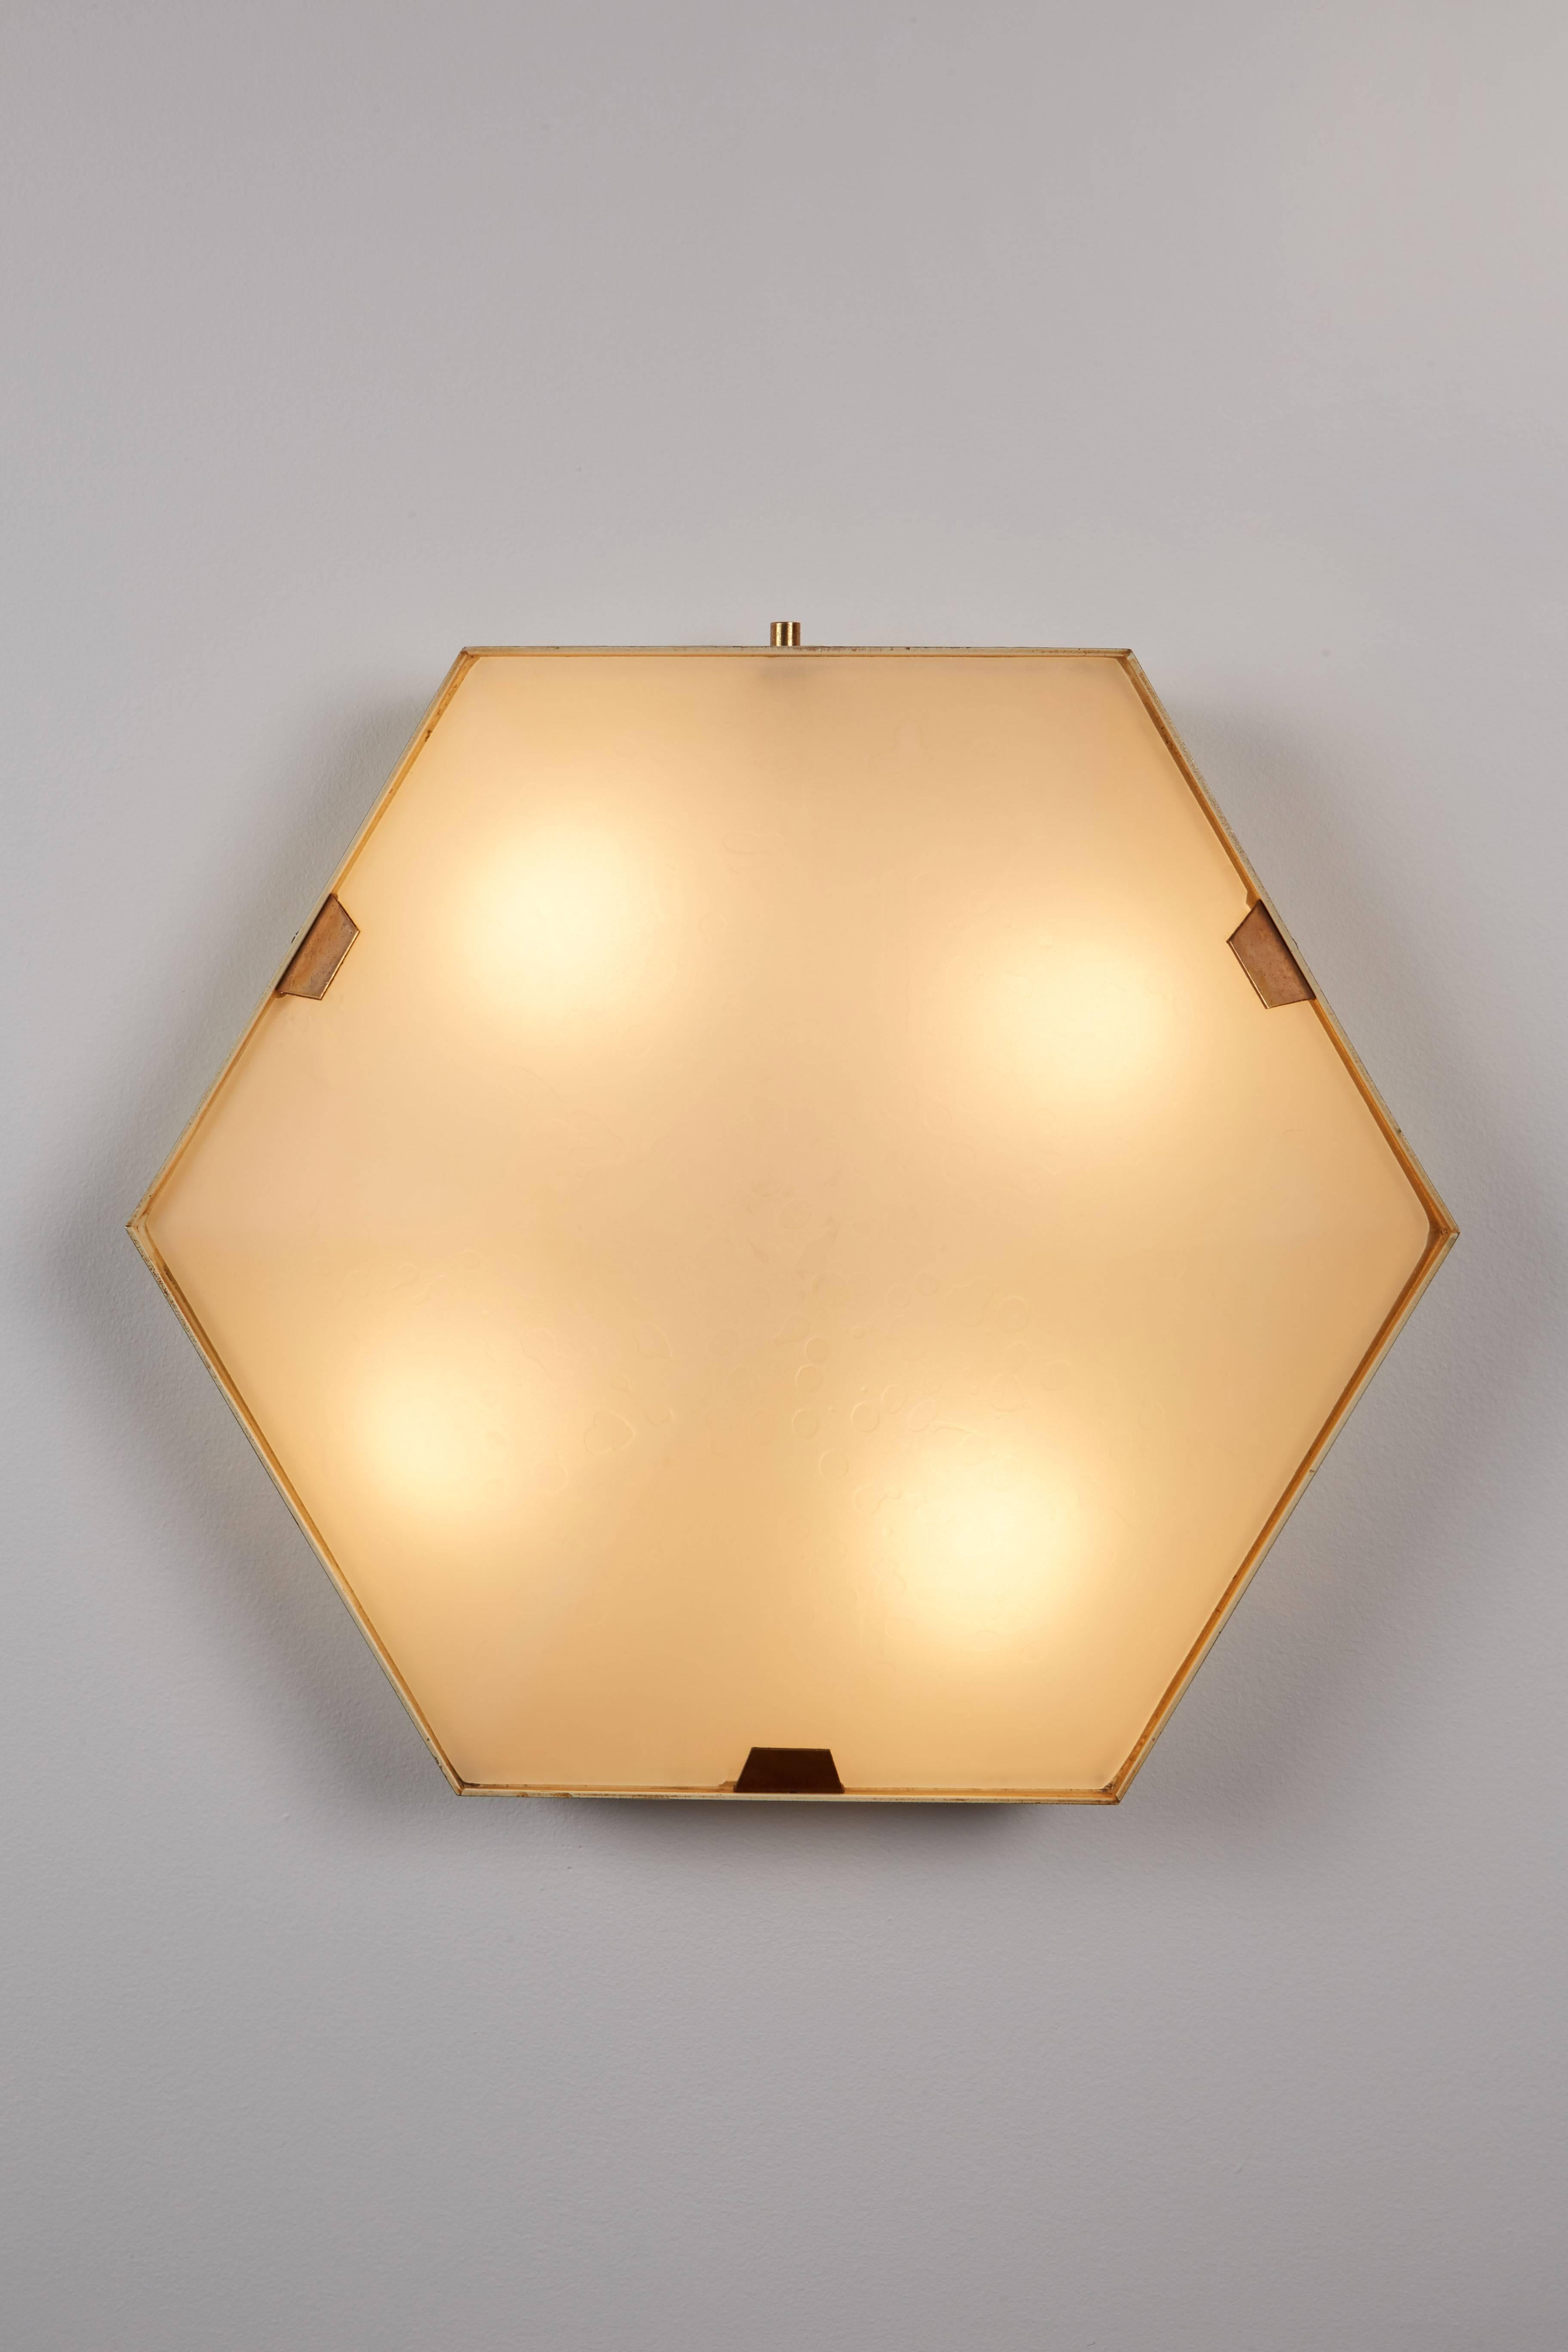 Single Hexagonal Brass and Glass Ceiling/Wall Lights by Stilnovo 2